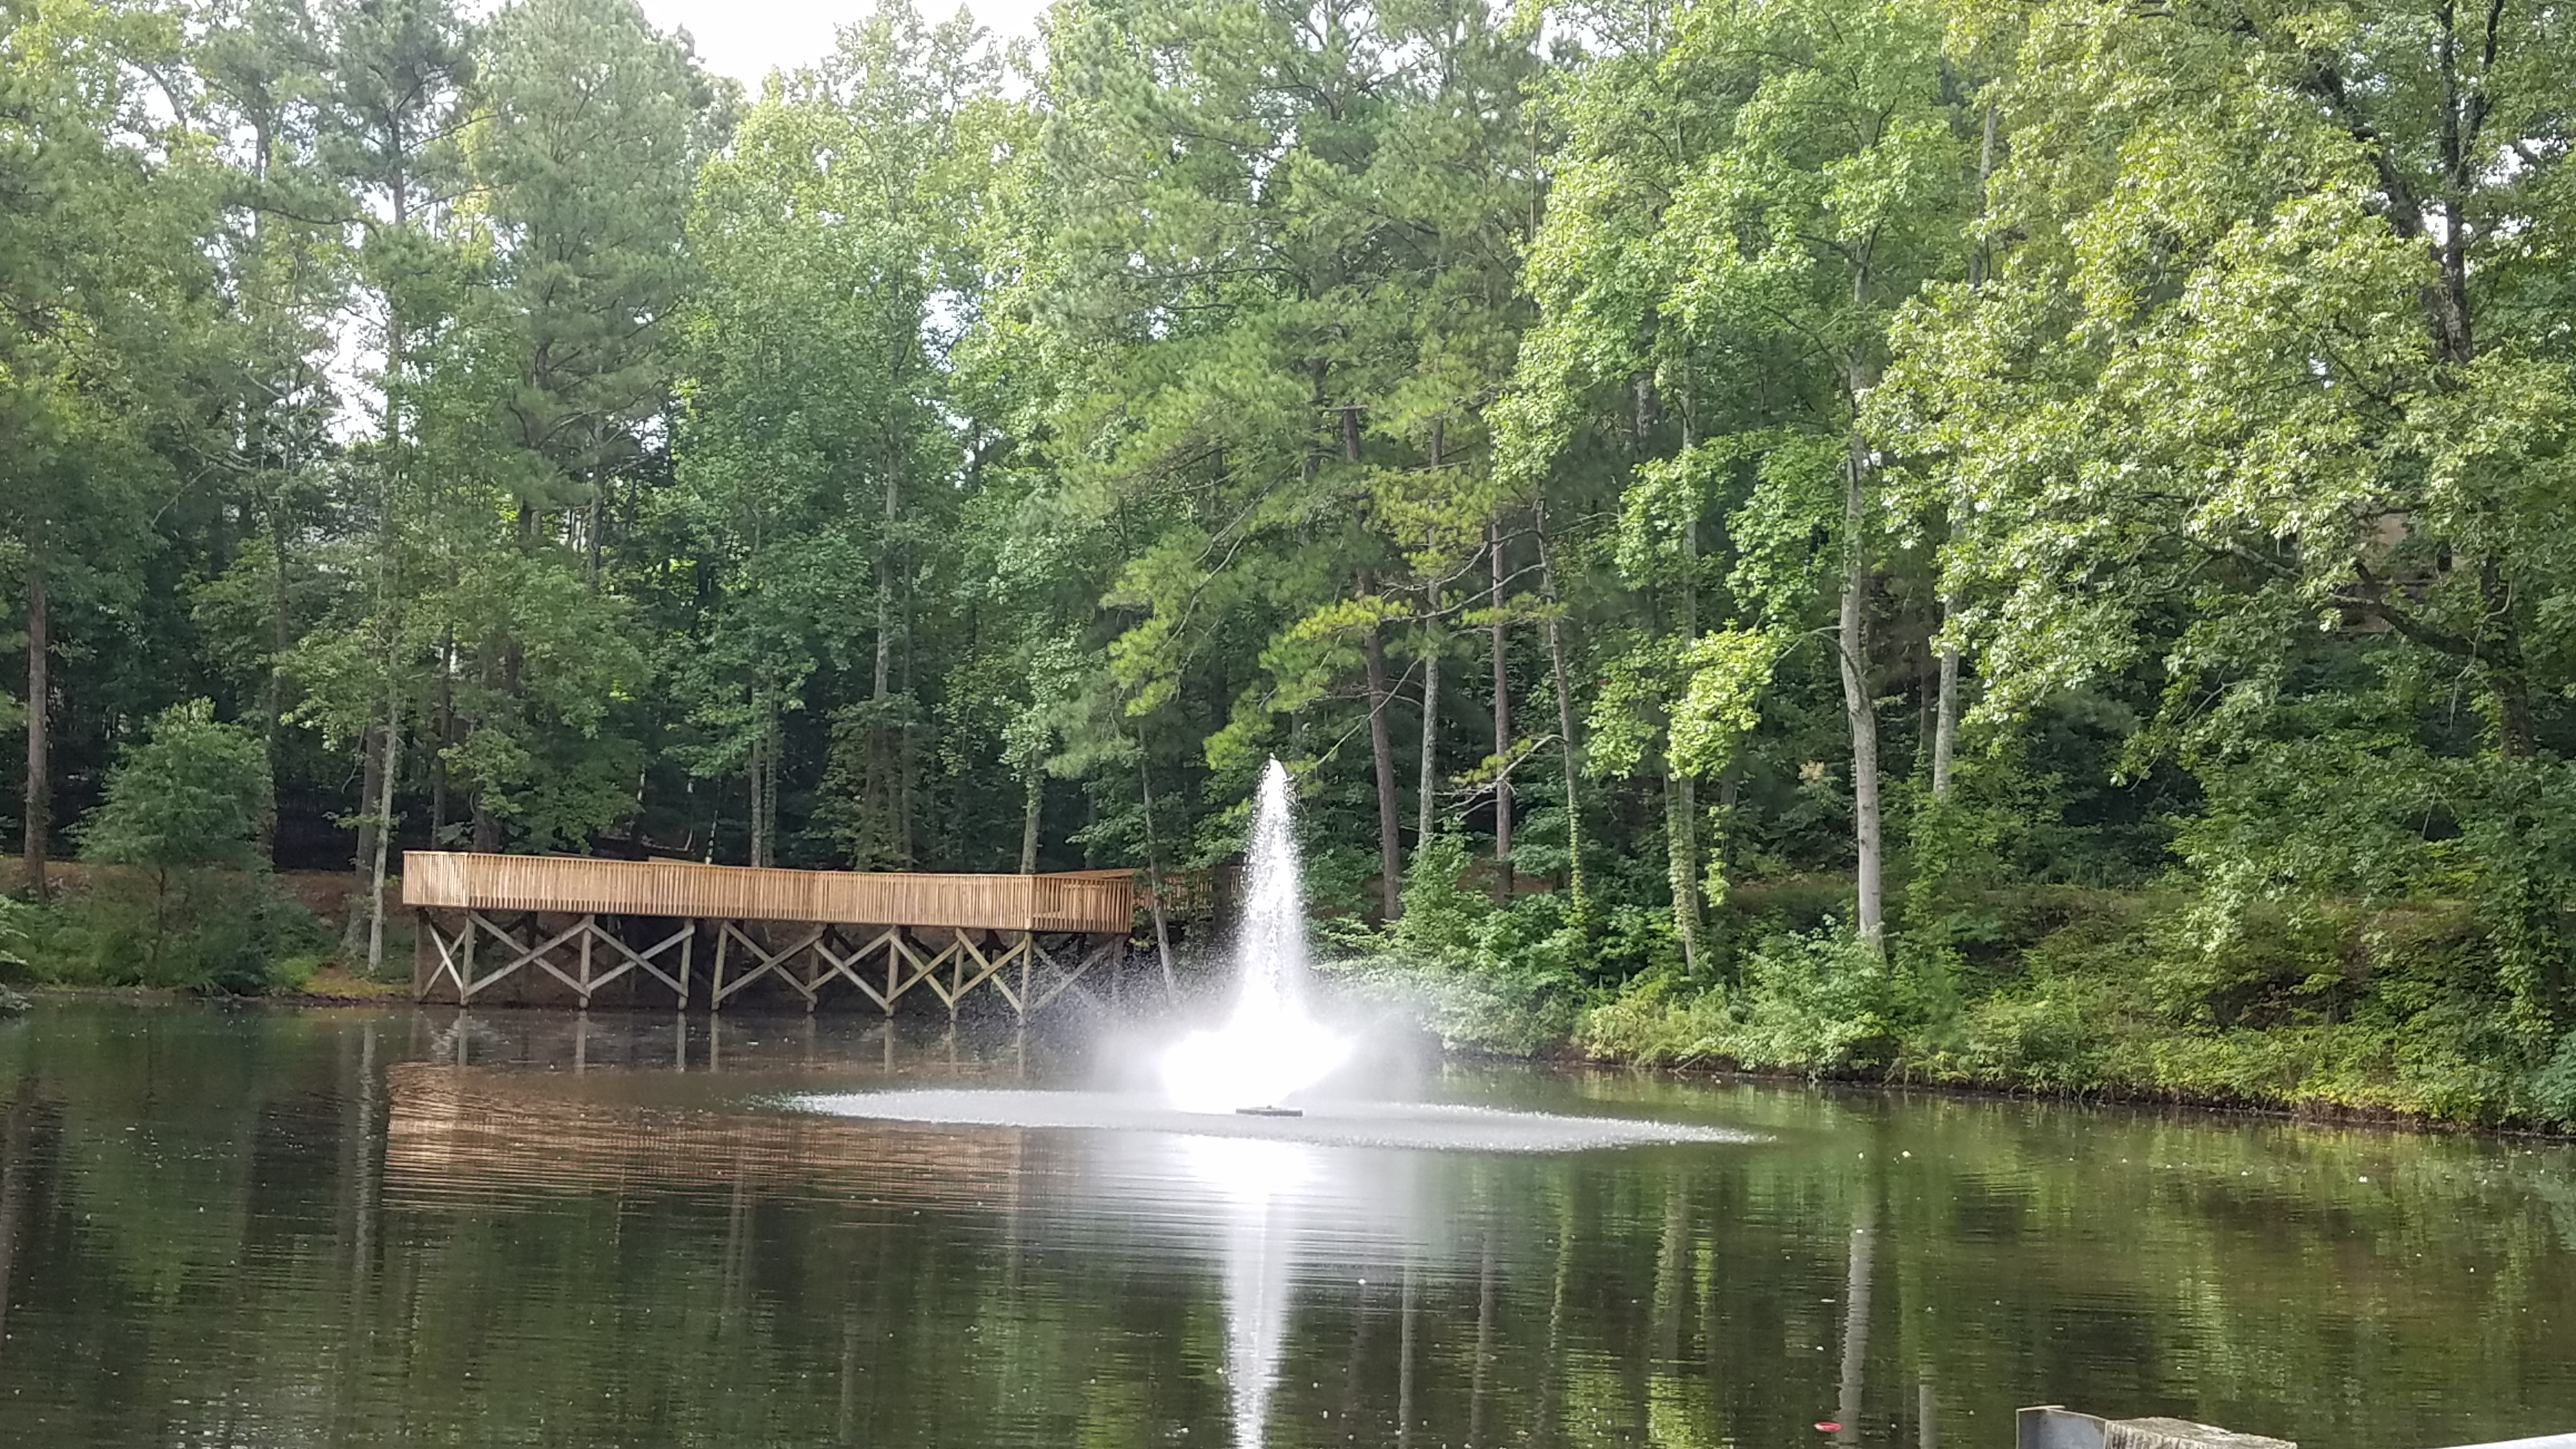 Lake Fountain at Thompson Park